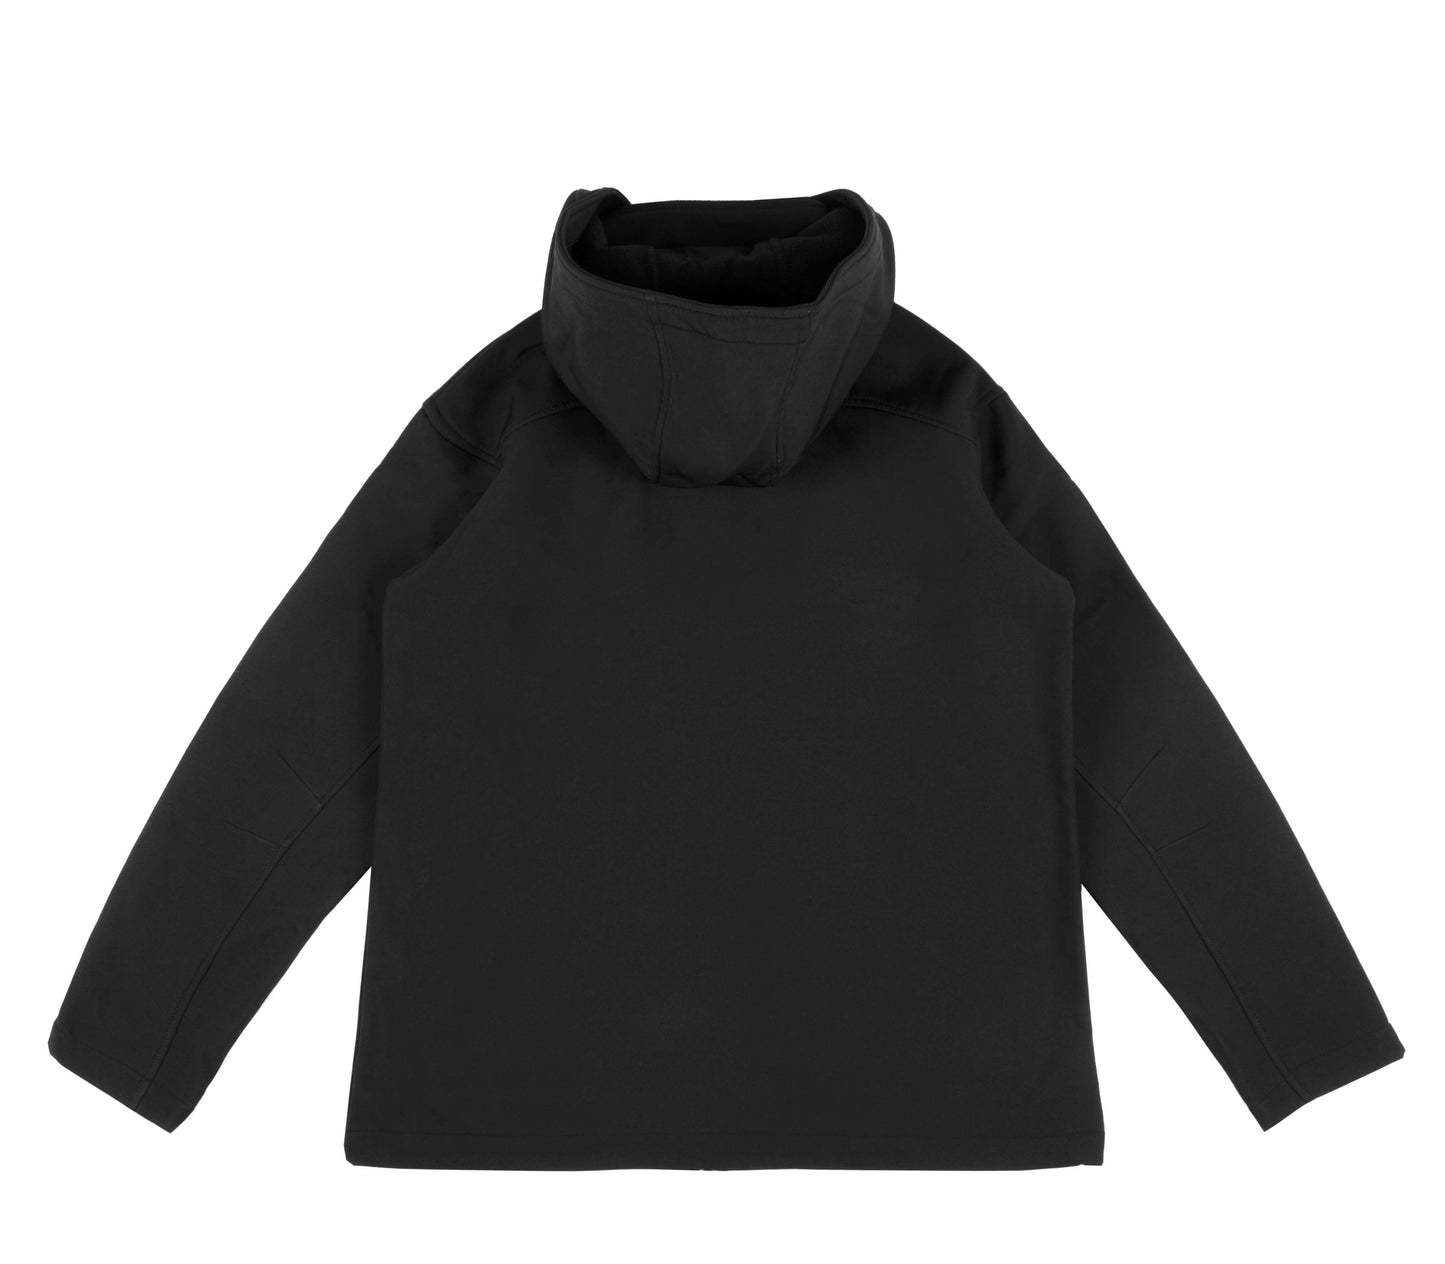 Men's Black Soft Shell Jacket